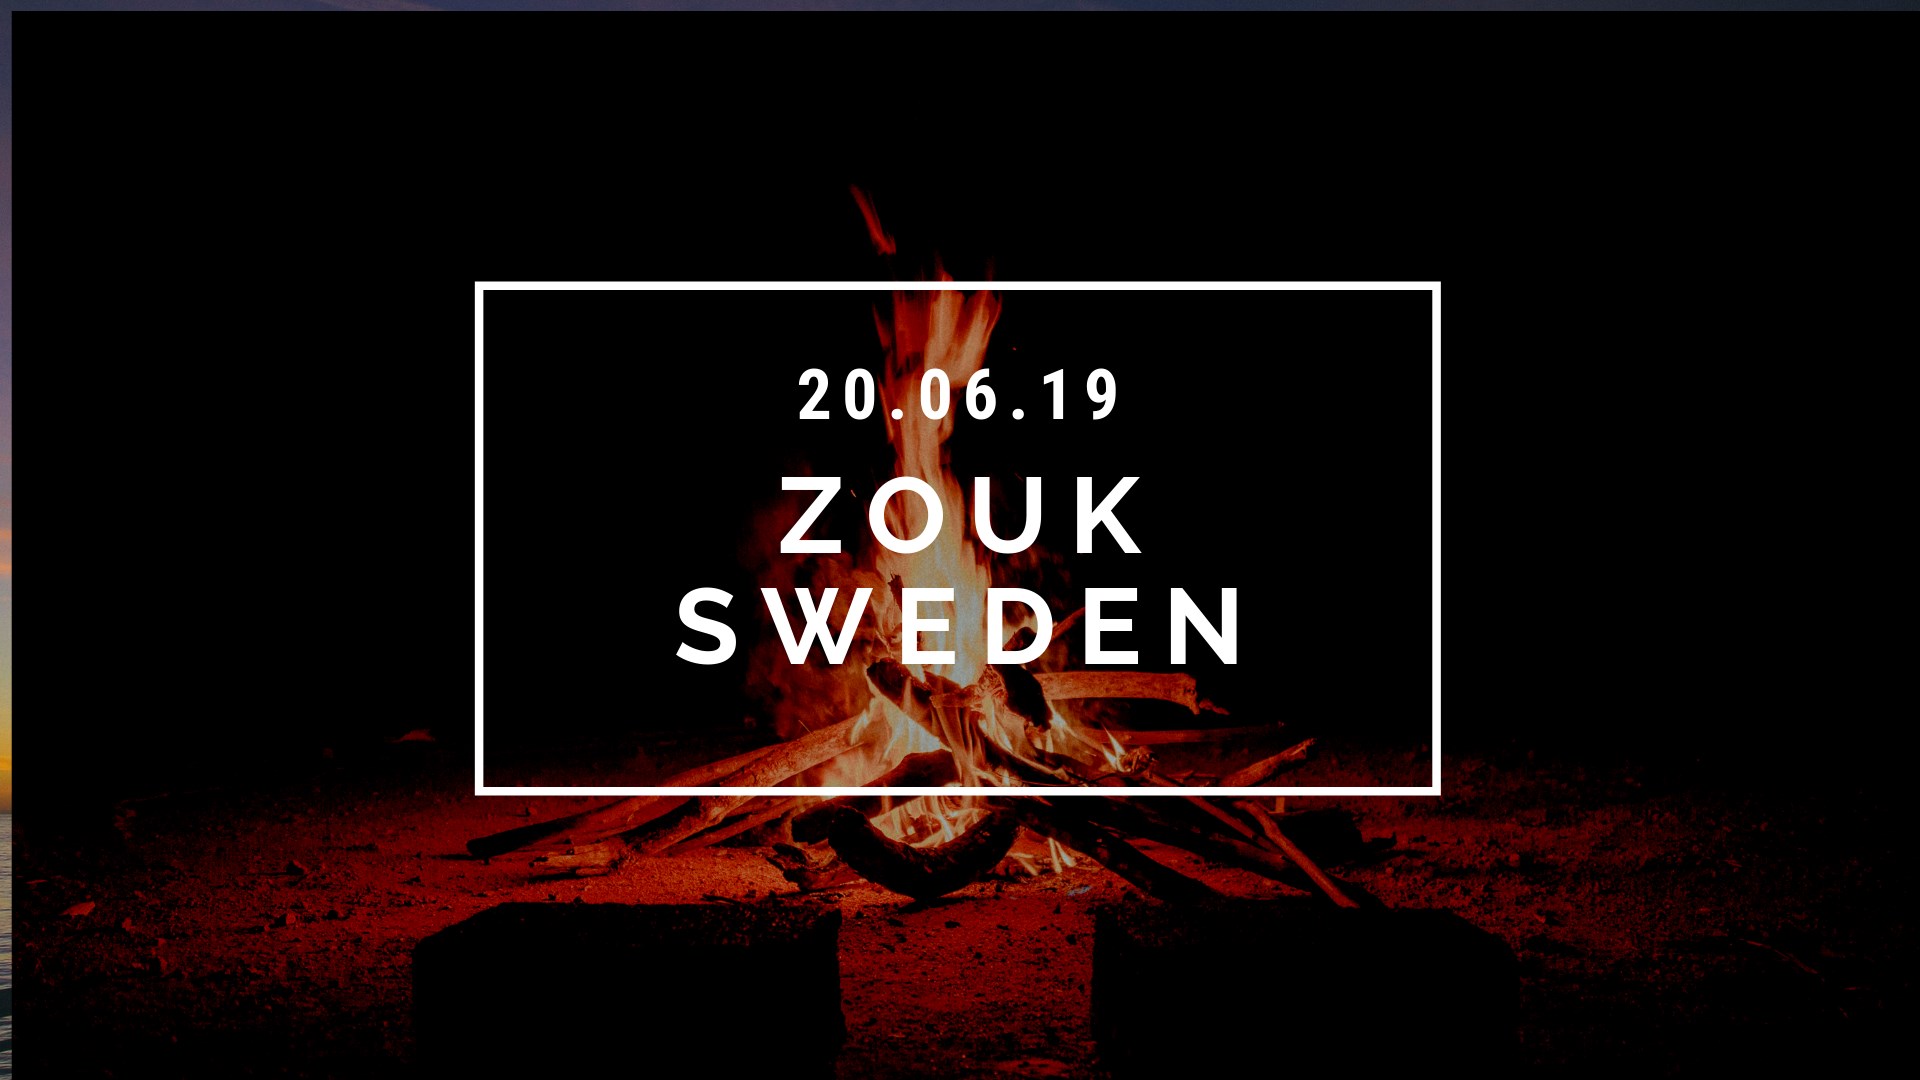 Midsummer Zouk with Zouk Sweden